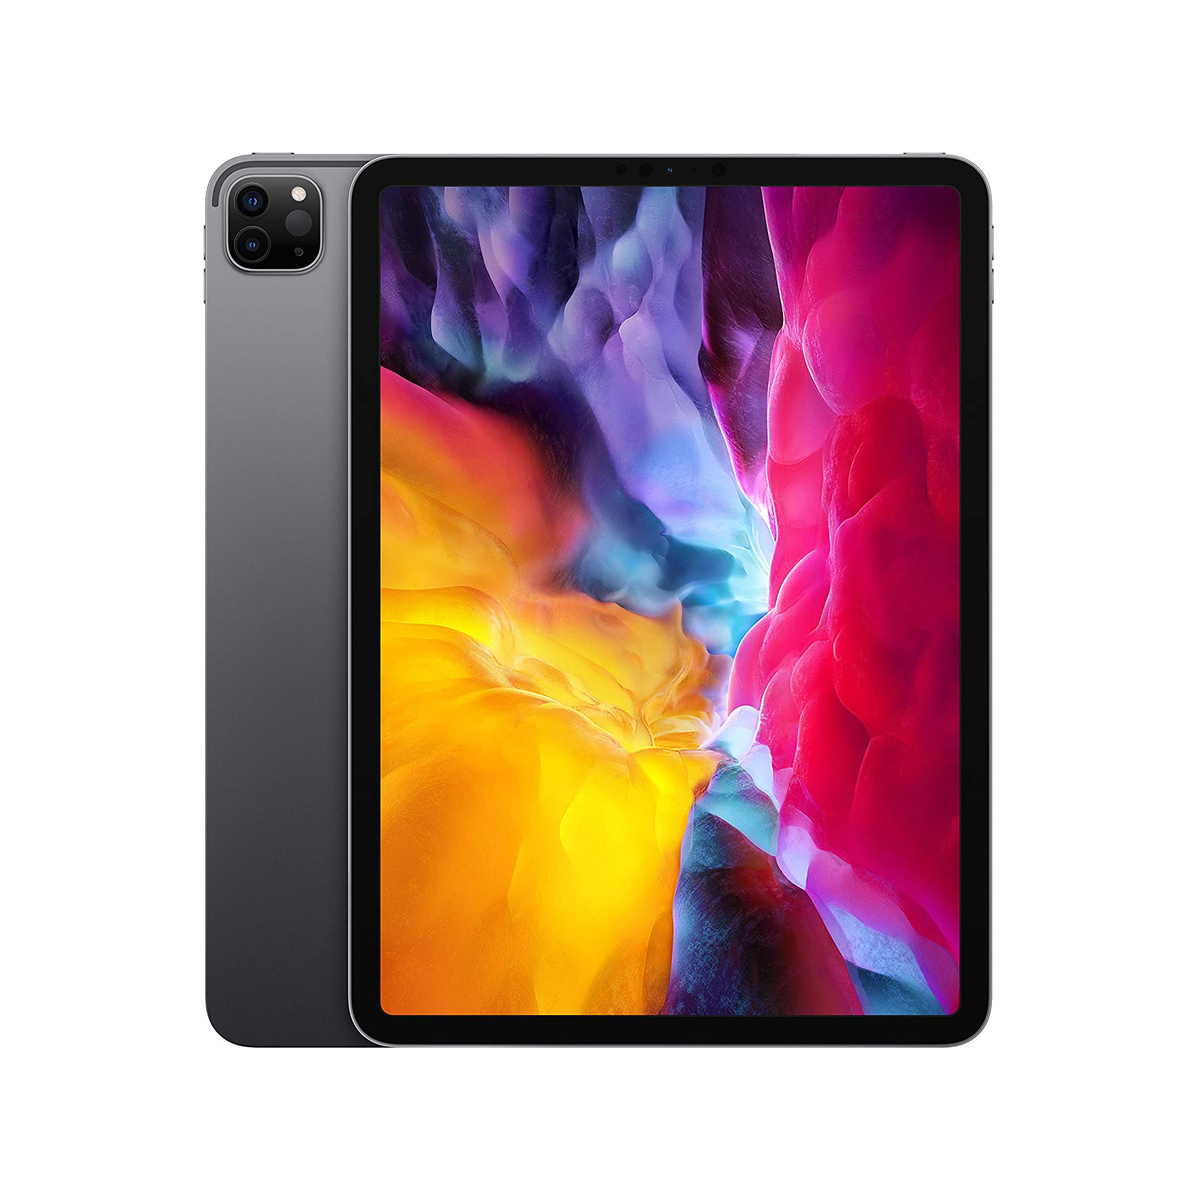 Apple iPad Pro (11-inch, Wi-Fi, 1TB) - Space Gray (2nd Generation)